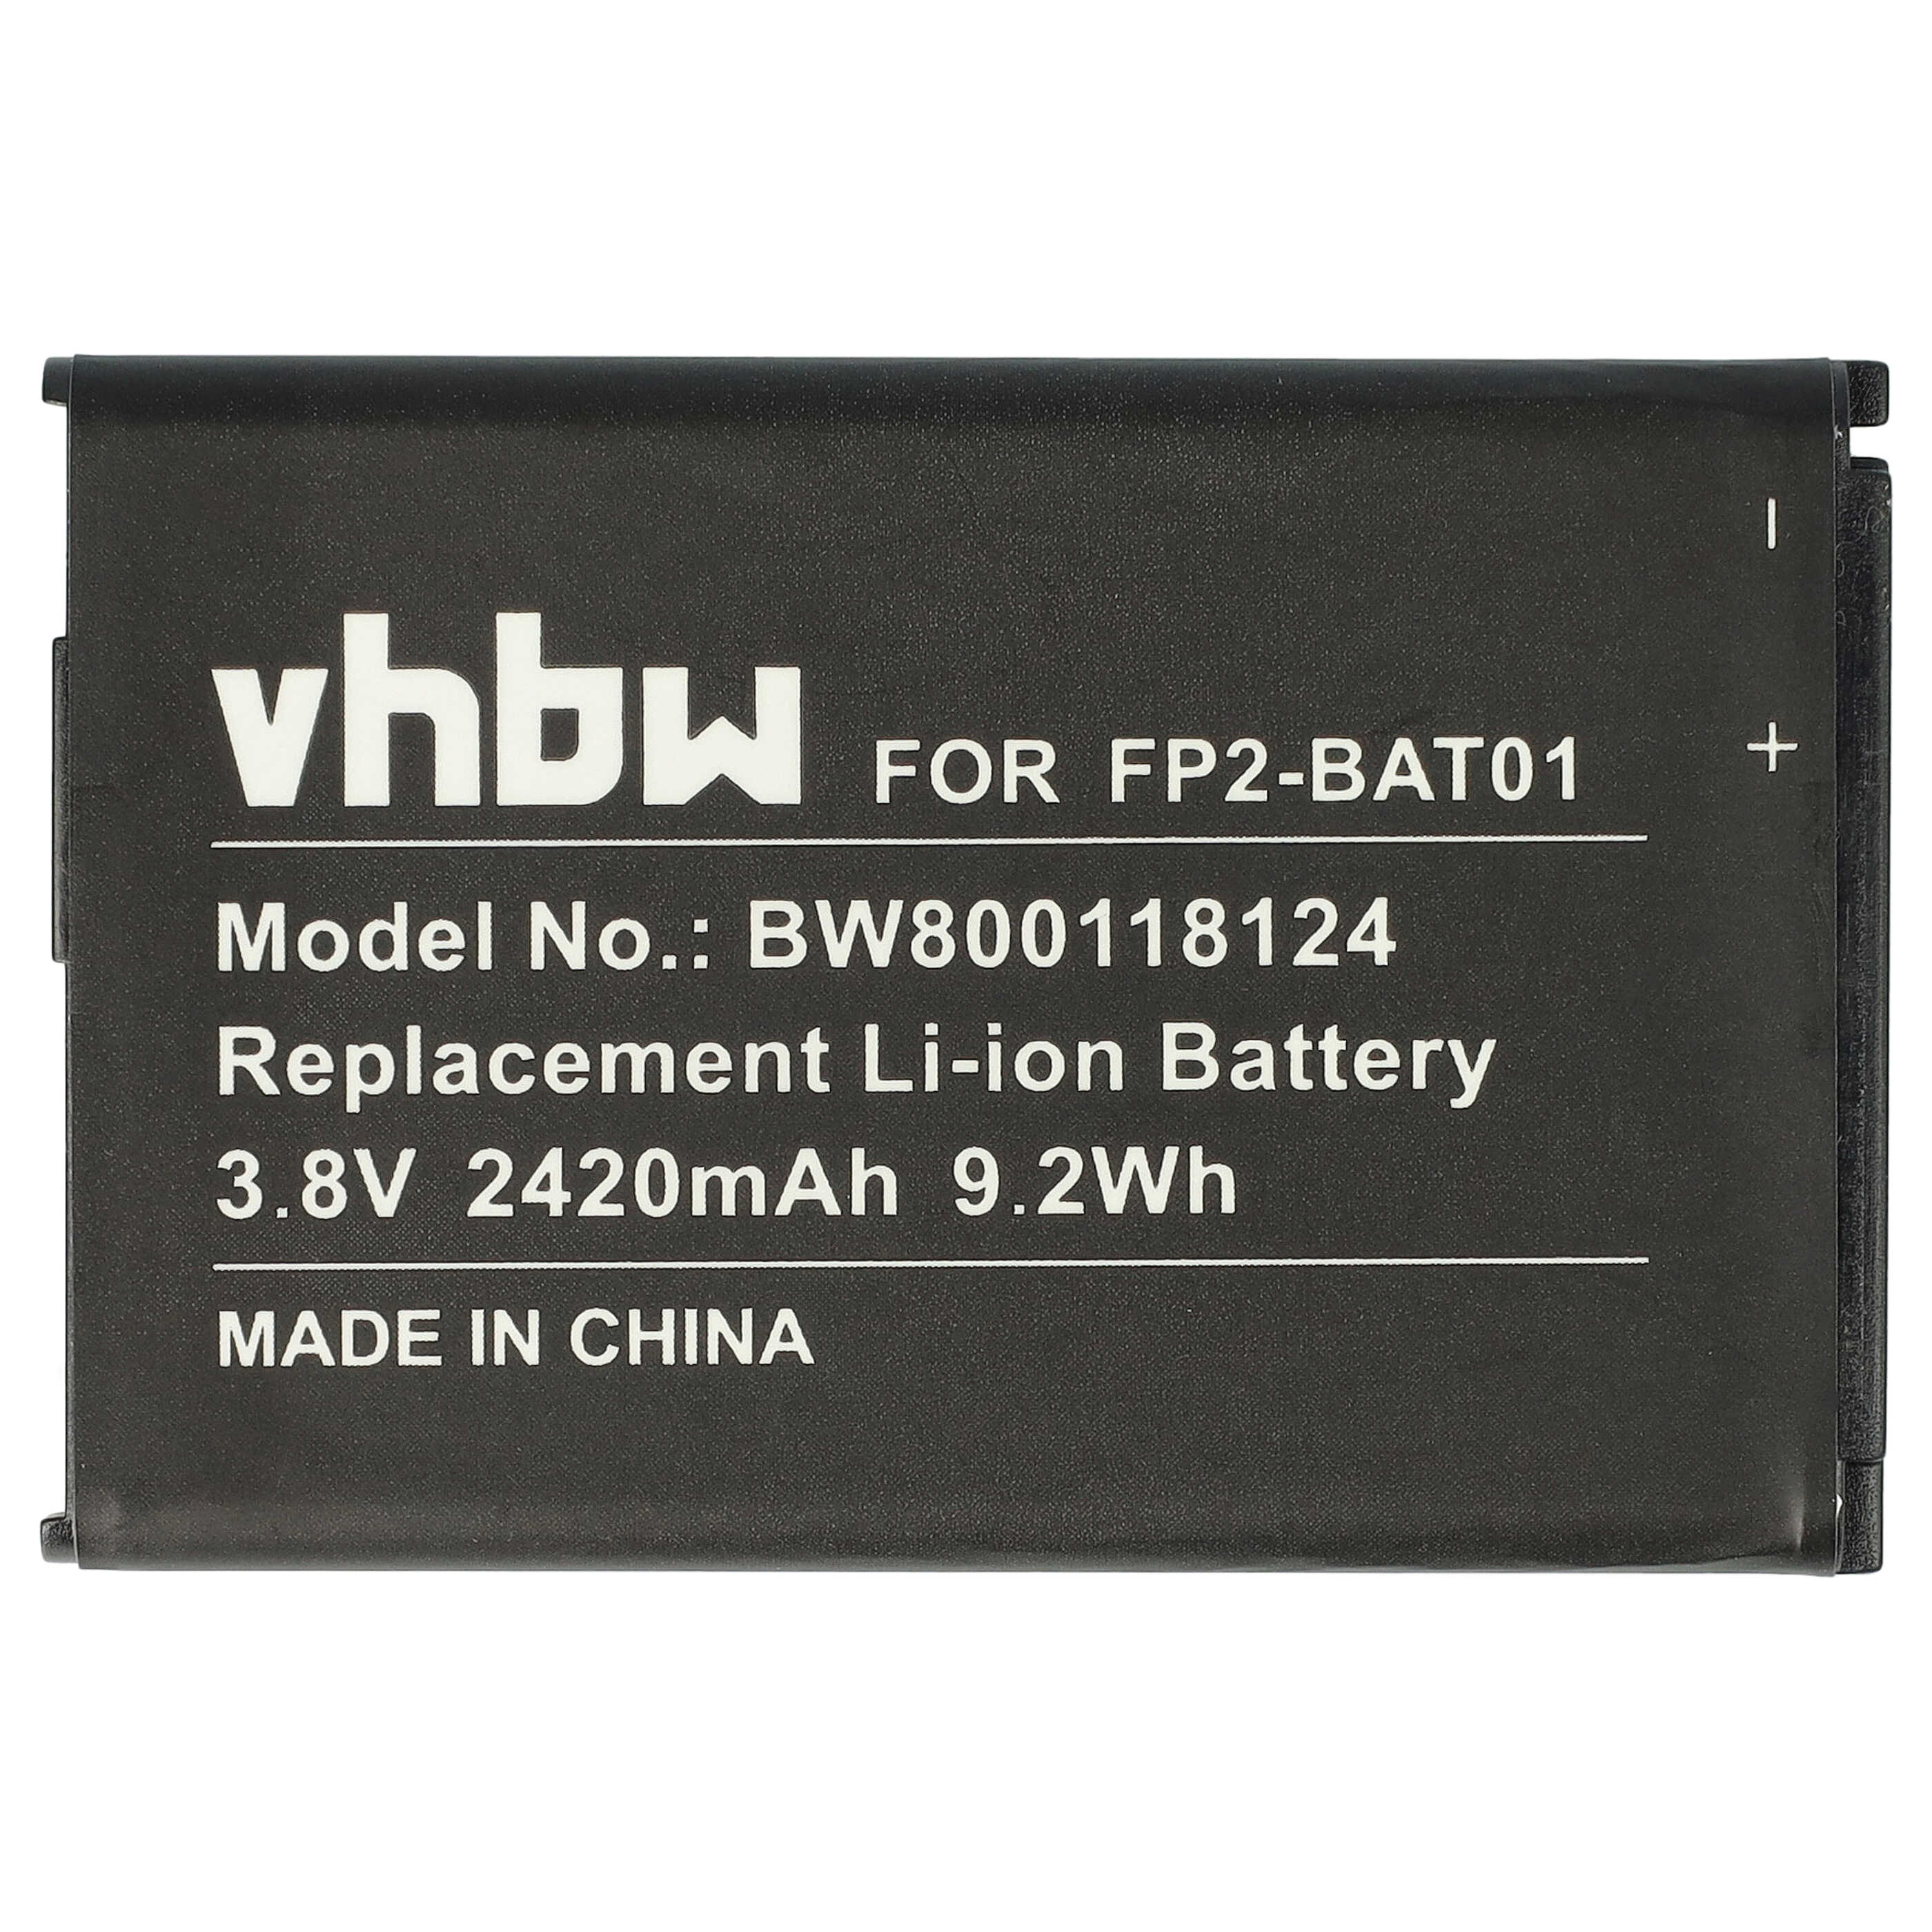 Mobile Phone Battery Replacement for Fairphone FP2-BAT01 - 2420mAh 3.8V Li-Ion